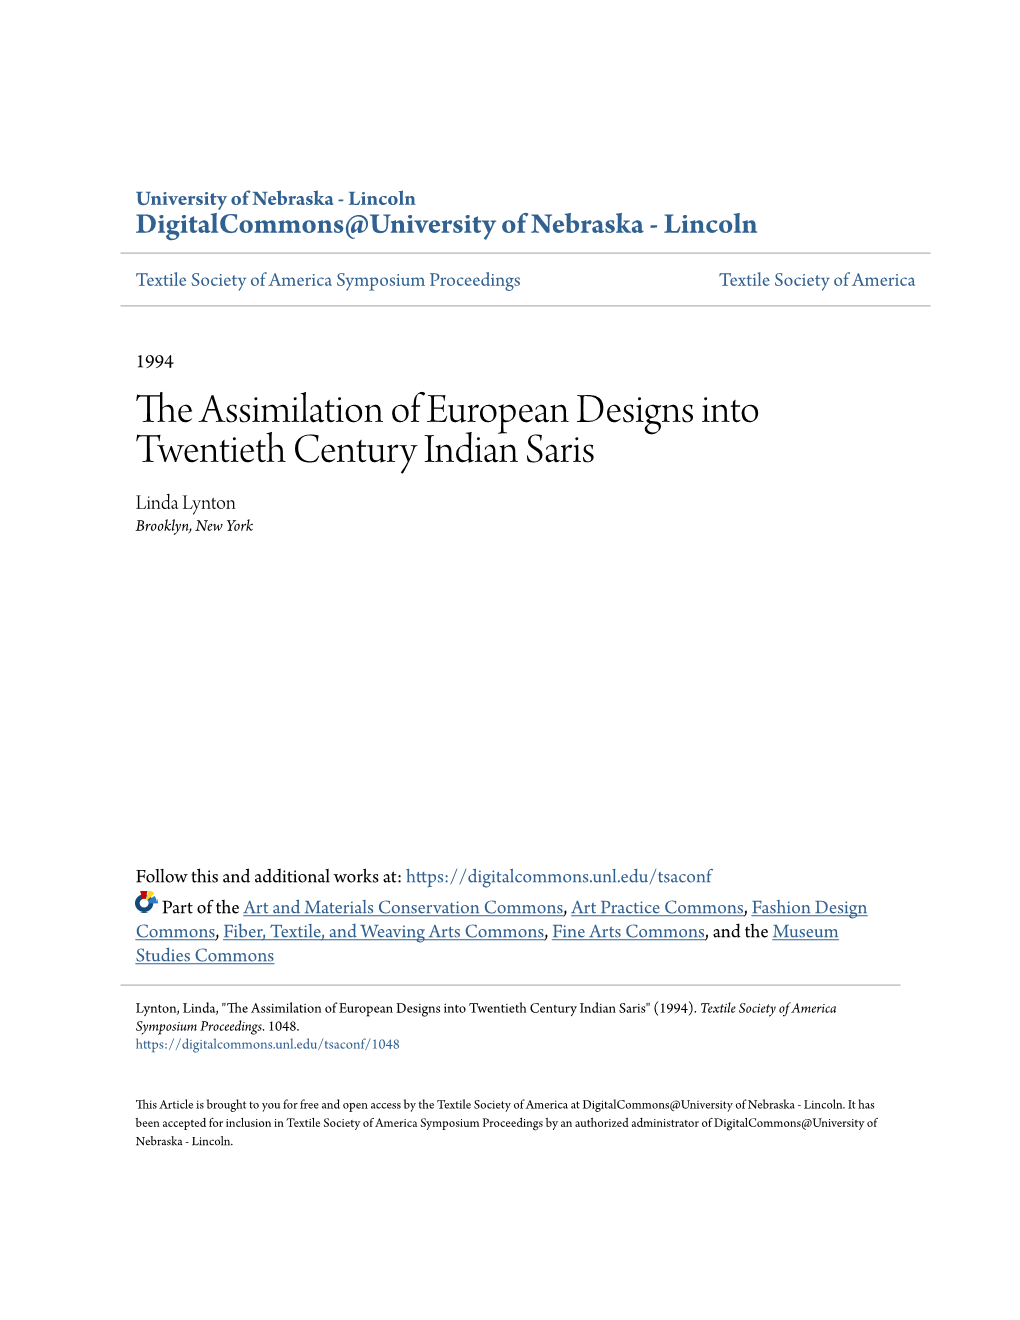 The Assimilation of European Designs Into Twentieth Century Indian Saris Linda Lynton Brooklyn, New York